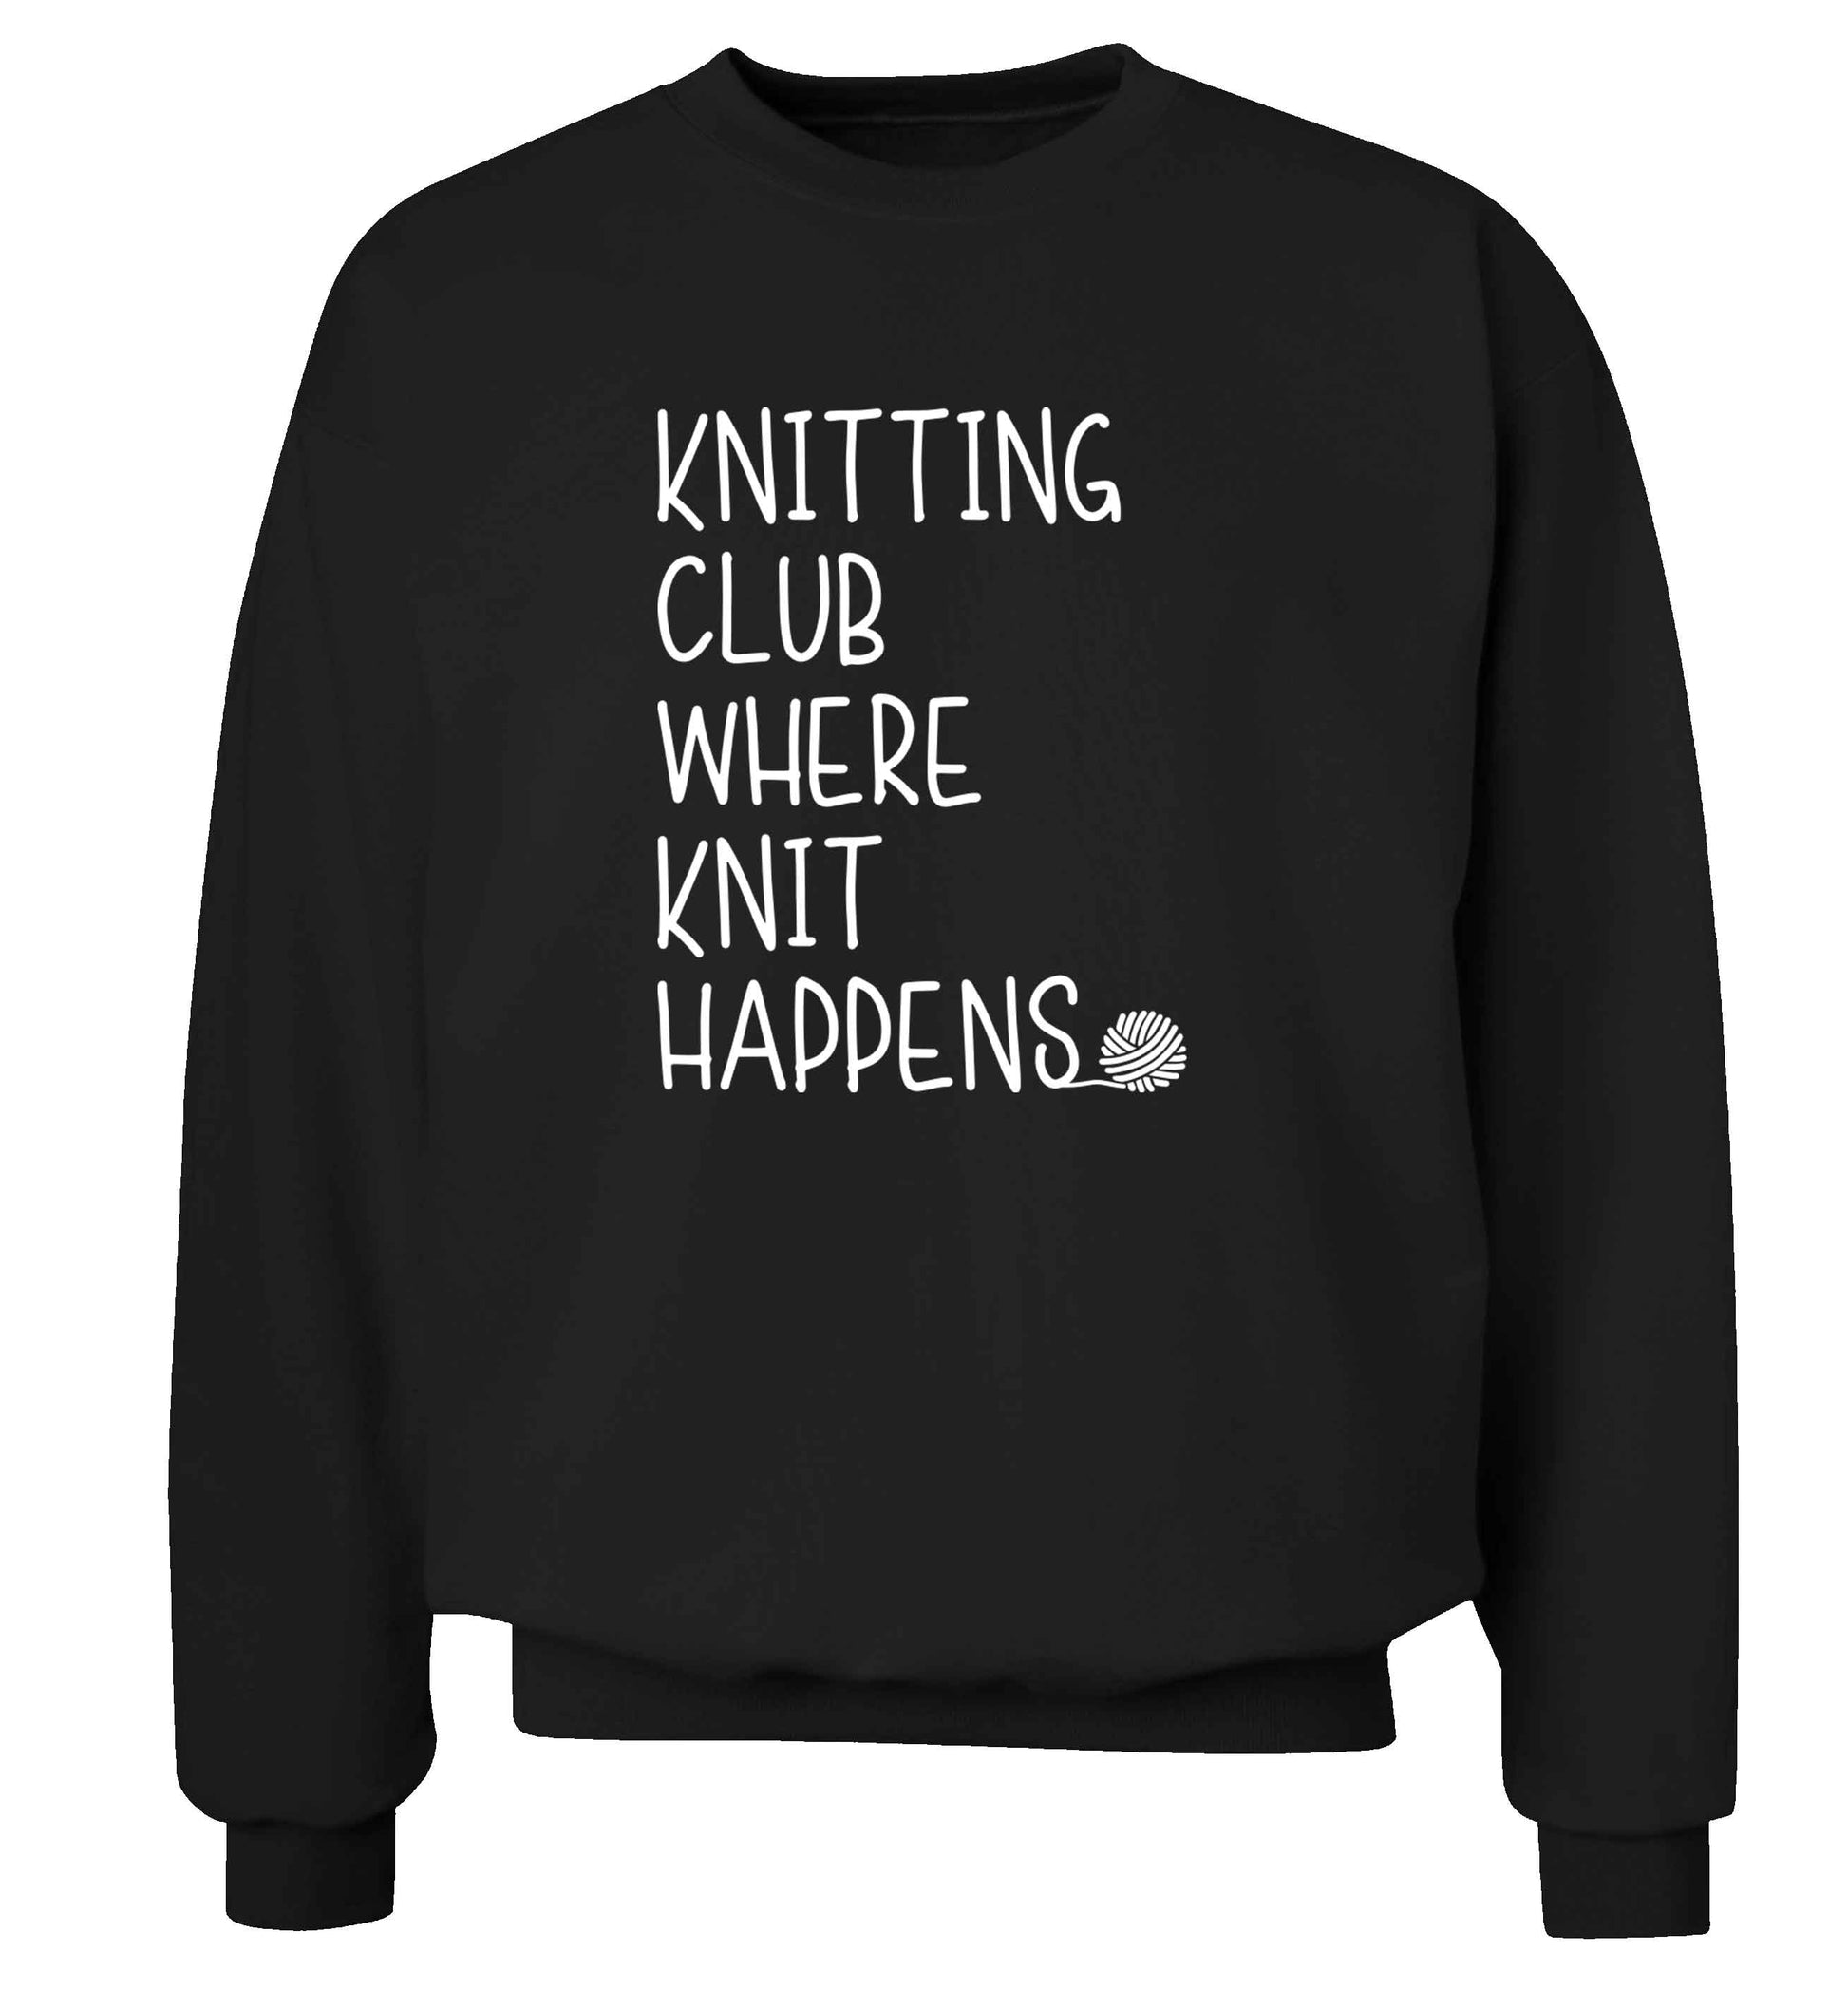 Knitting club where knit happens adult's unisex black sweater 2XL